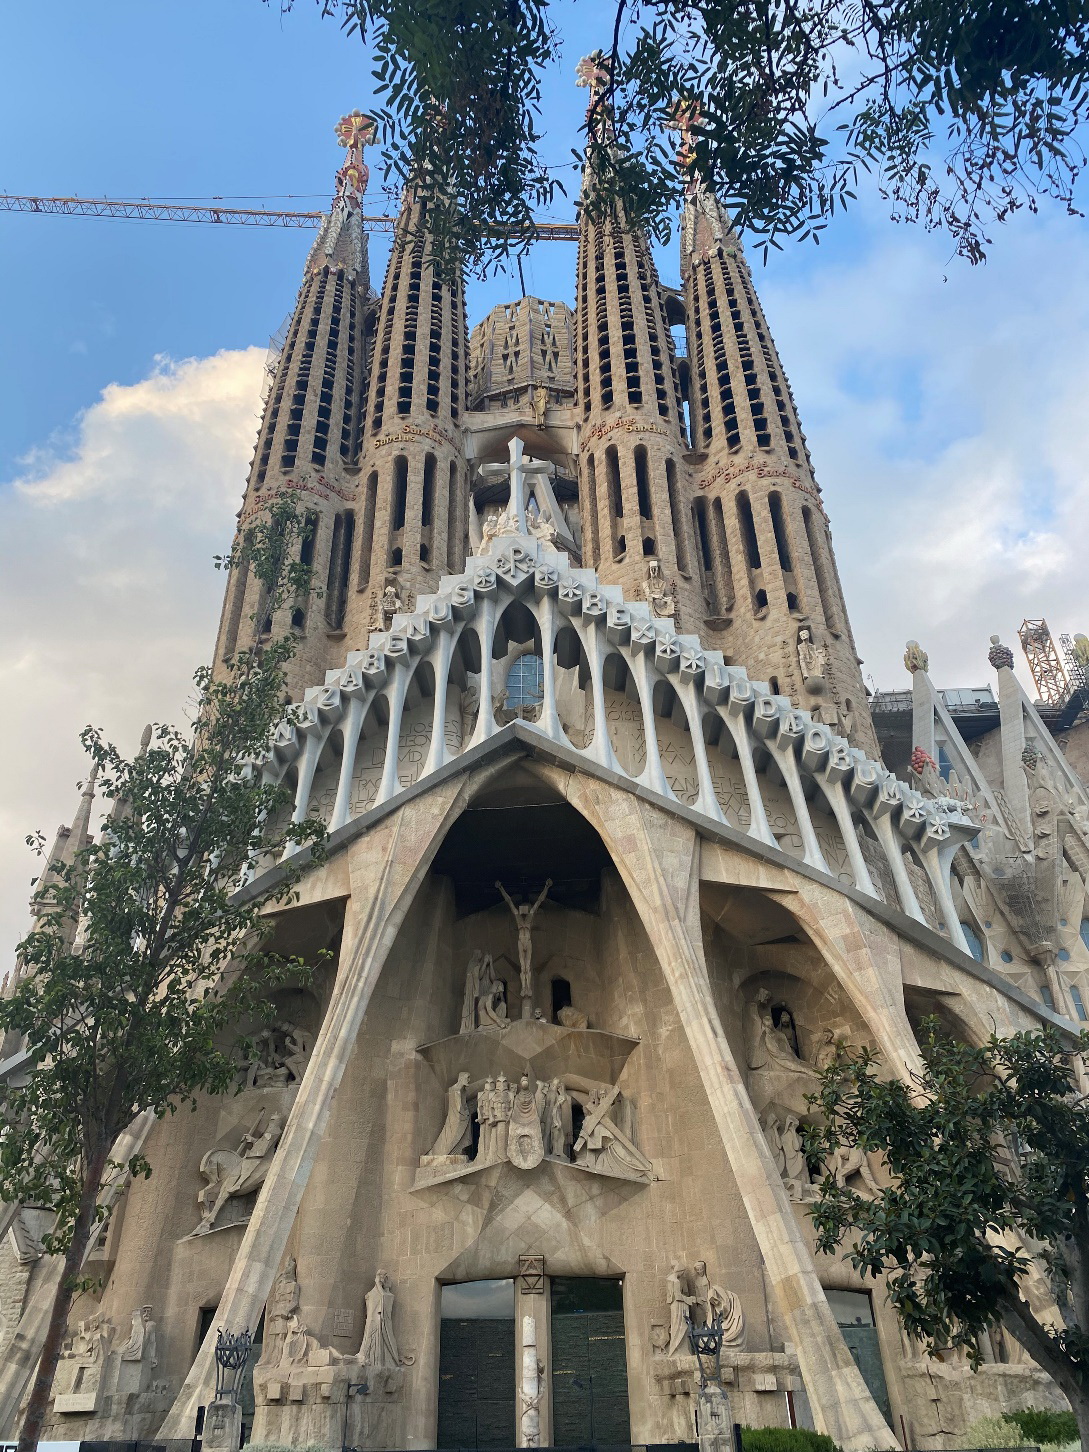 La Sagrada Familia Cathedral by Gaudi Barcelona